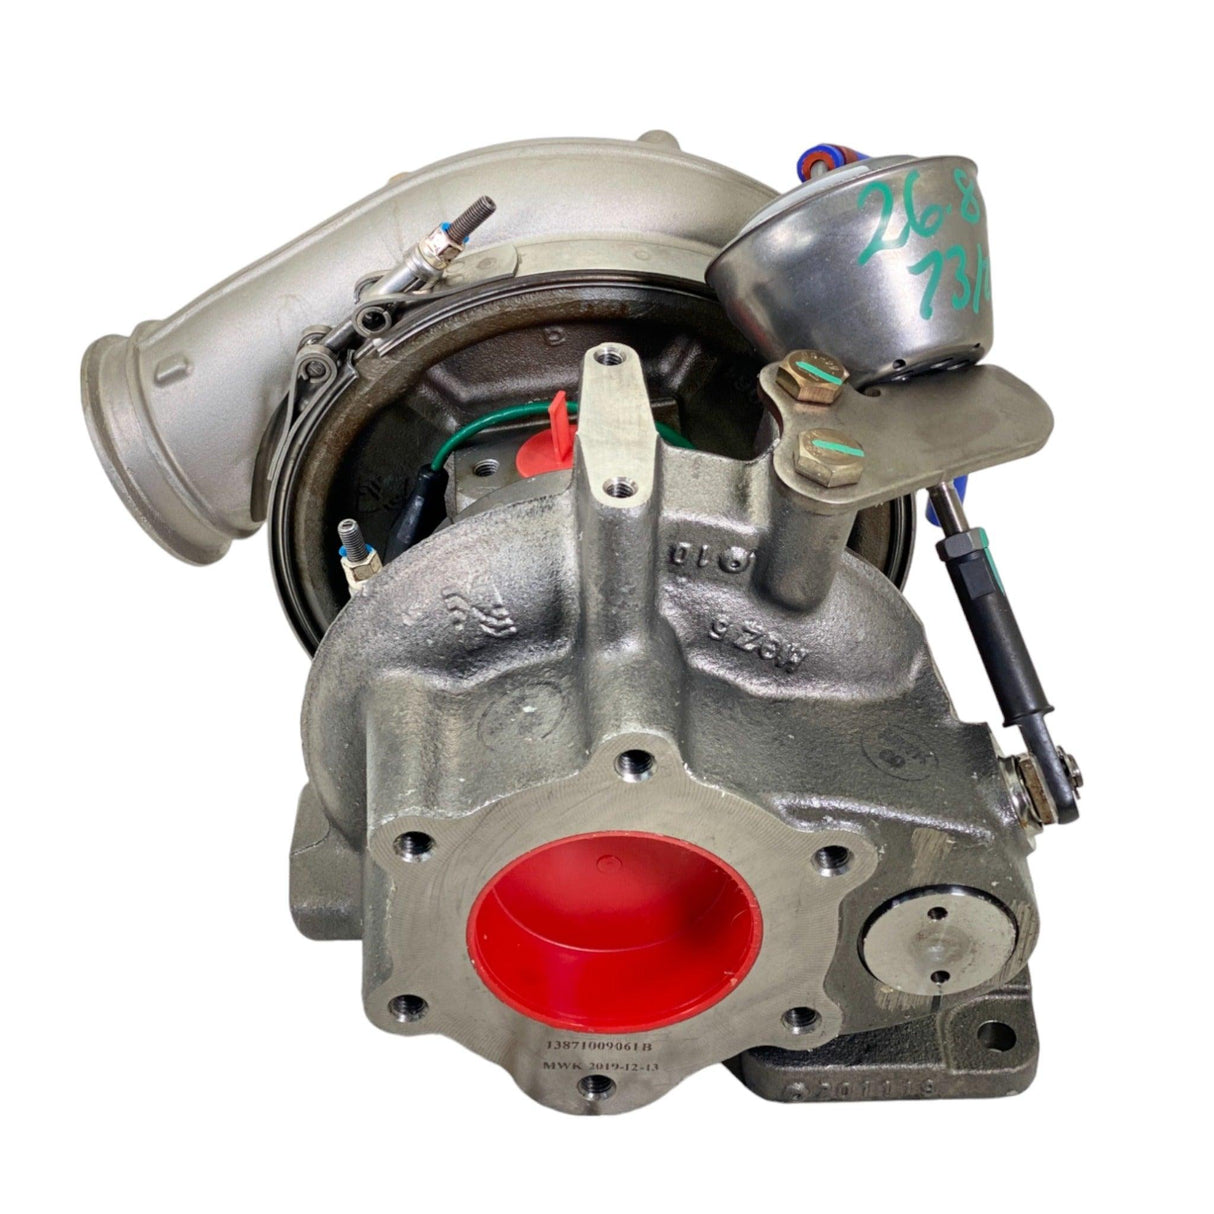 A4710967099 Oem Detroit Diesel Turbocharger For Dd13 12.8L 457-510Hp